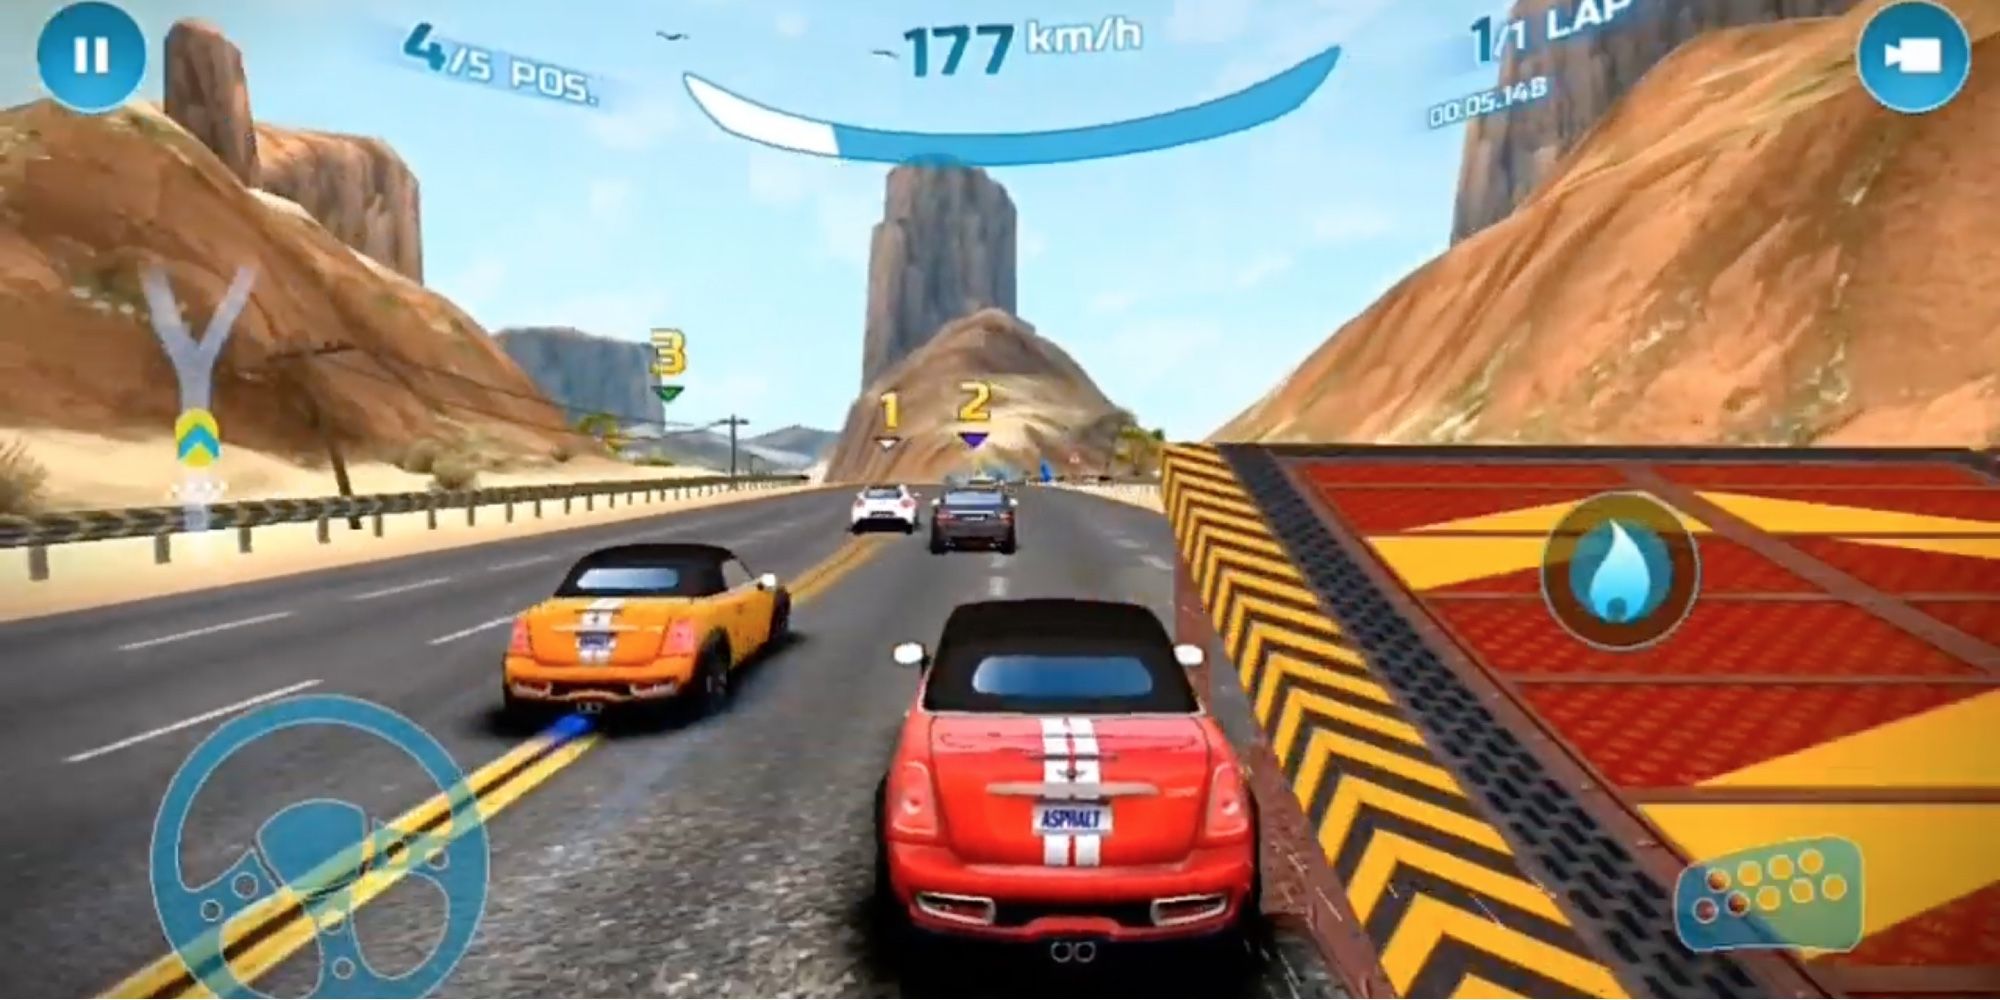 Mobile Racing Games - Asphalt Nitro - Player races against opponents in the desert